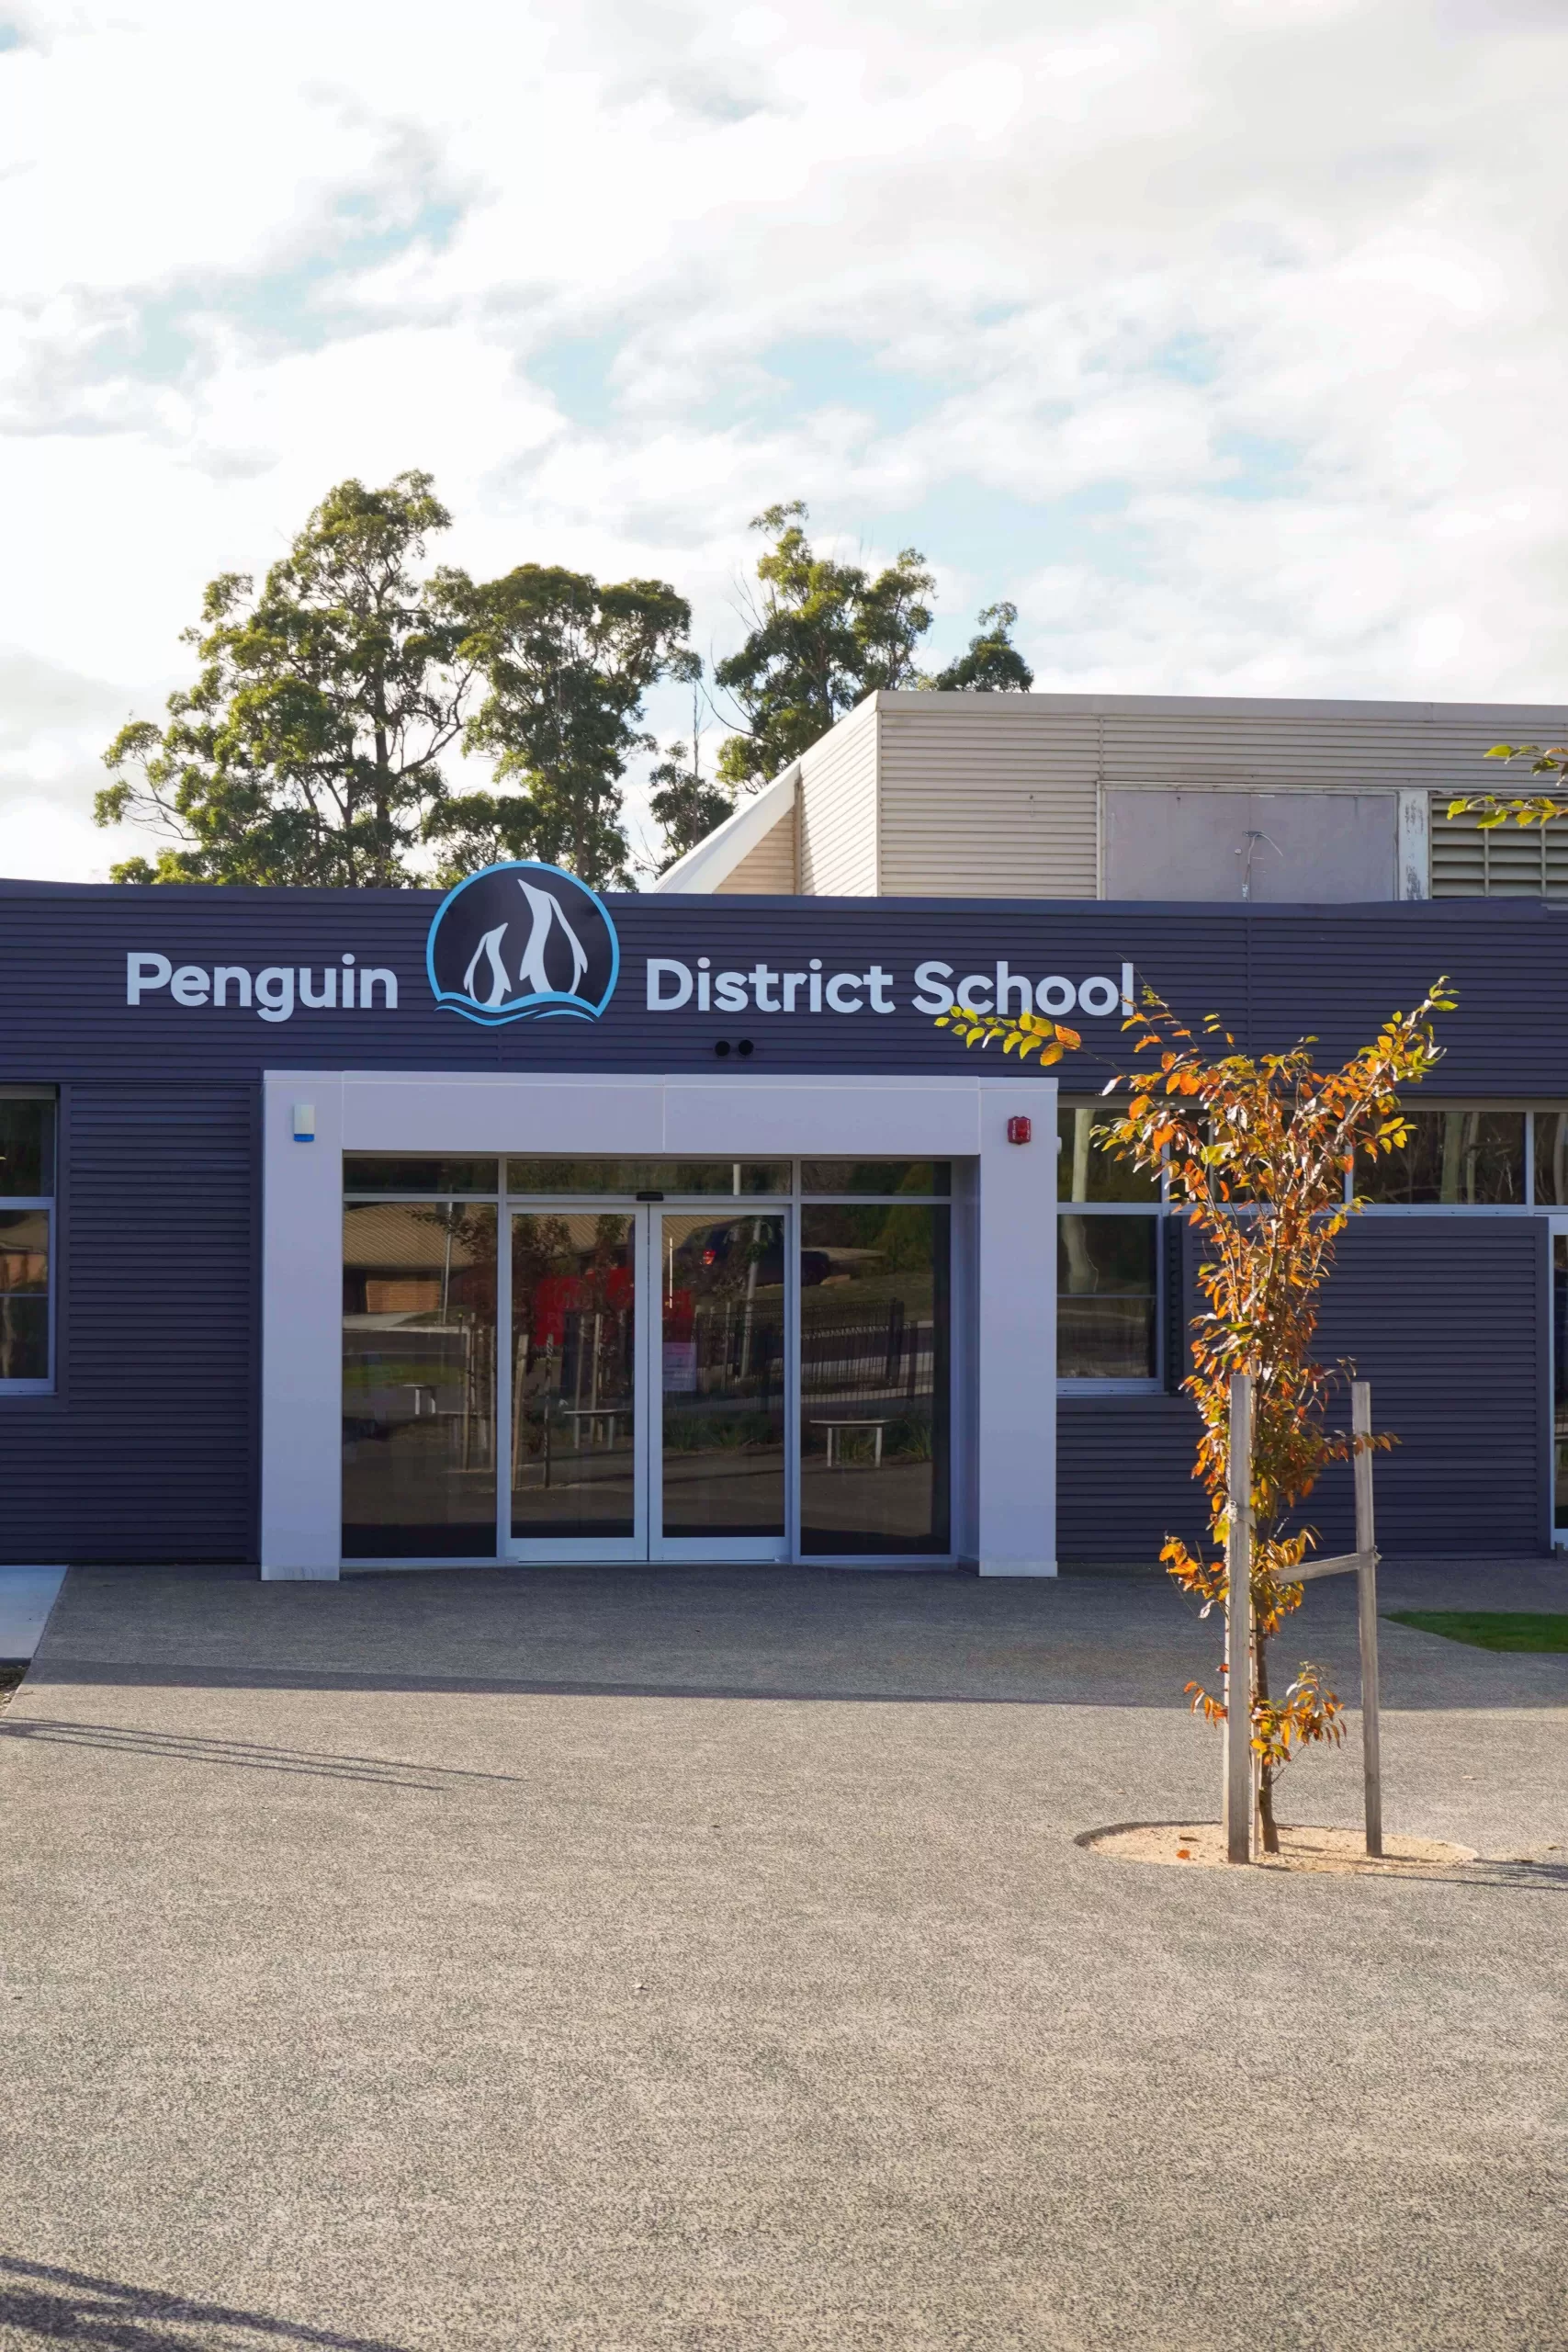 Penguin District School Signage